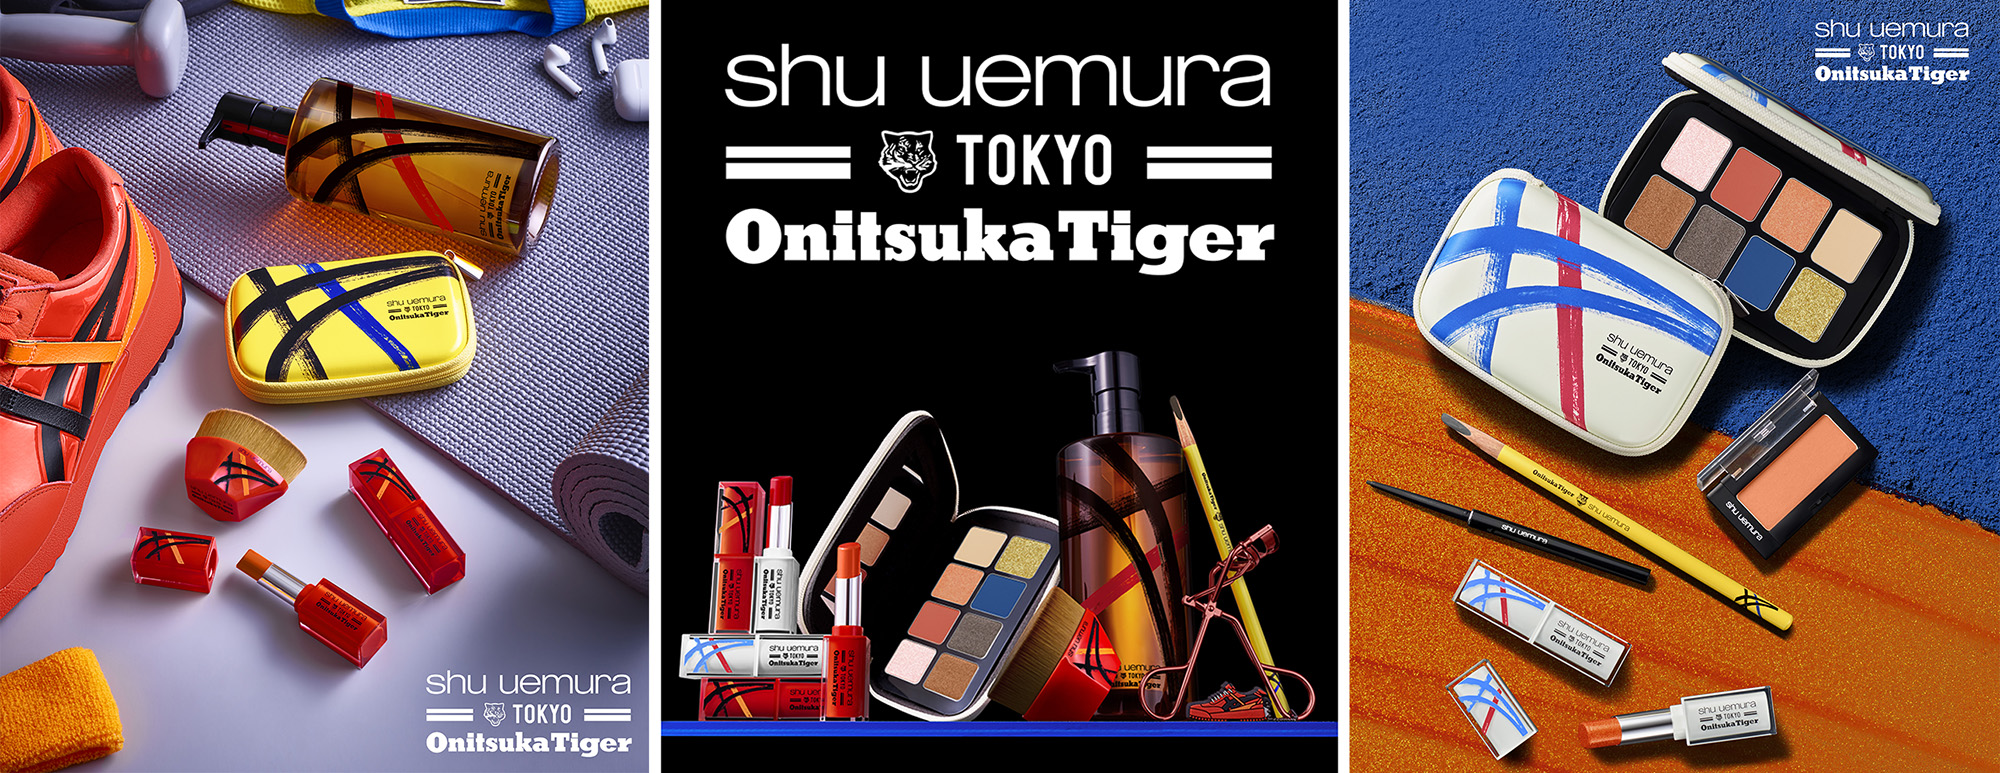 shu uemura X Onitsuka Tiger makeup 